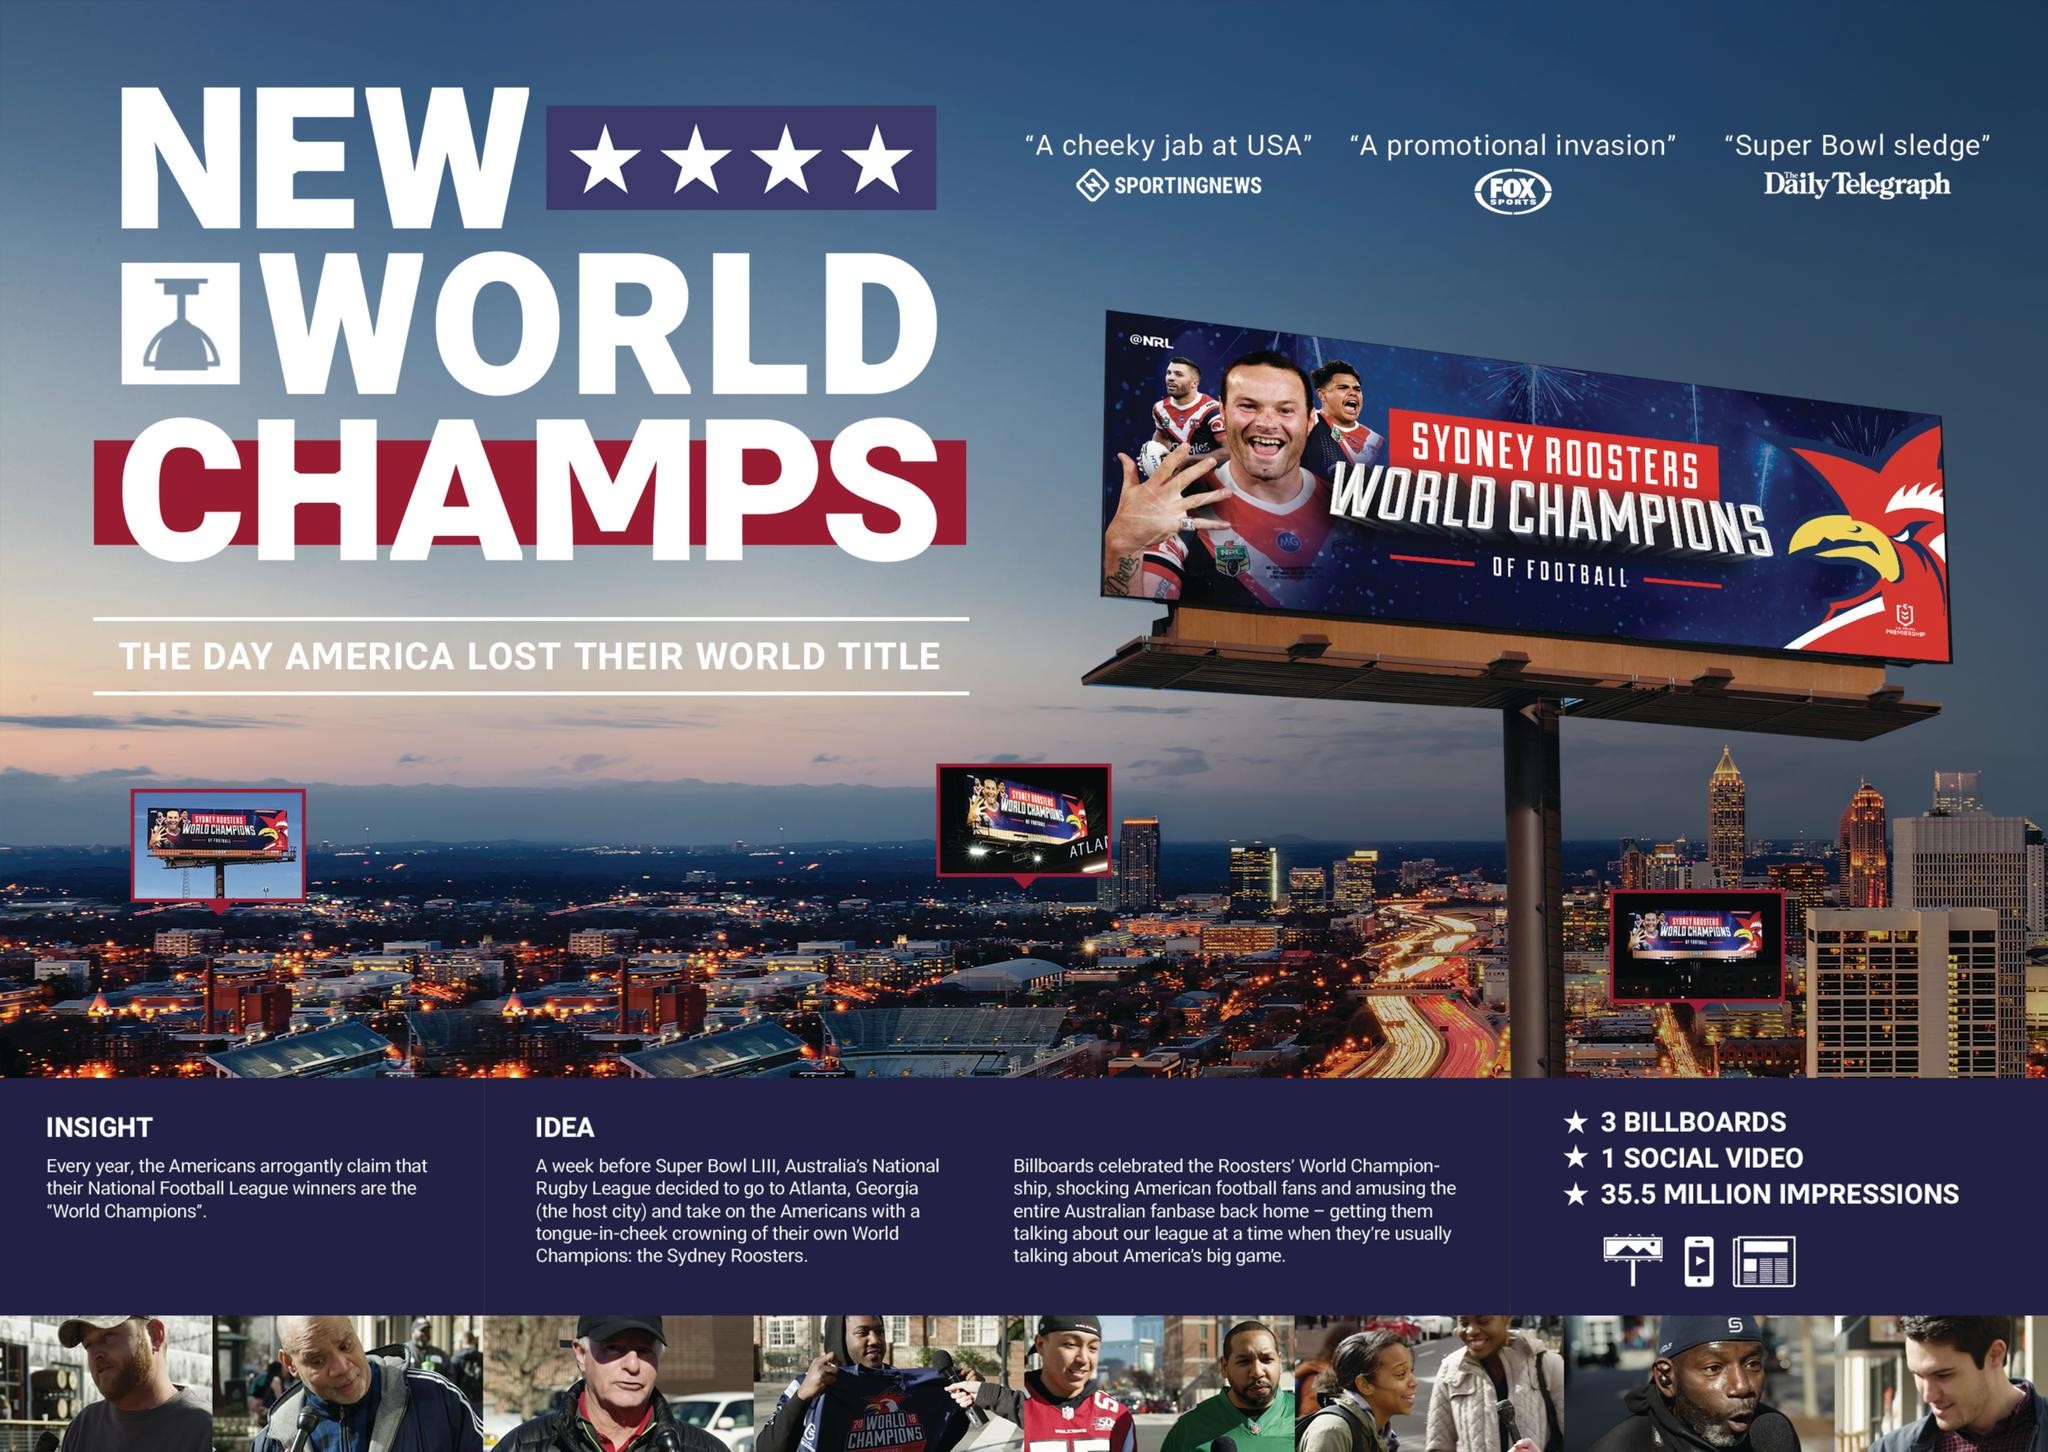 New World Champs